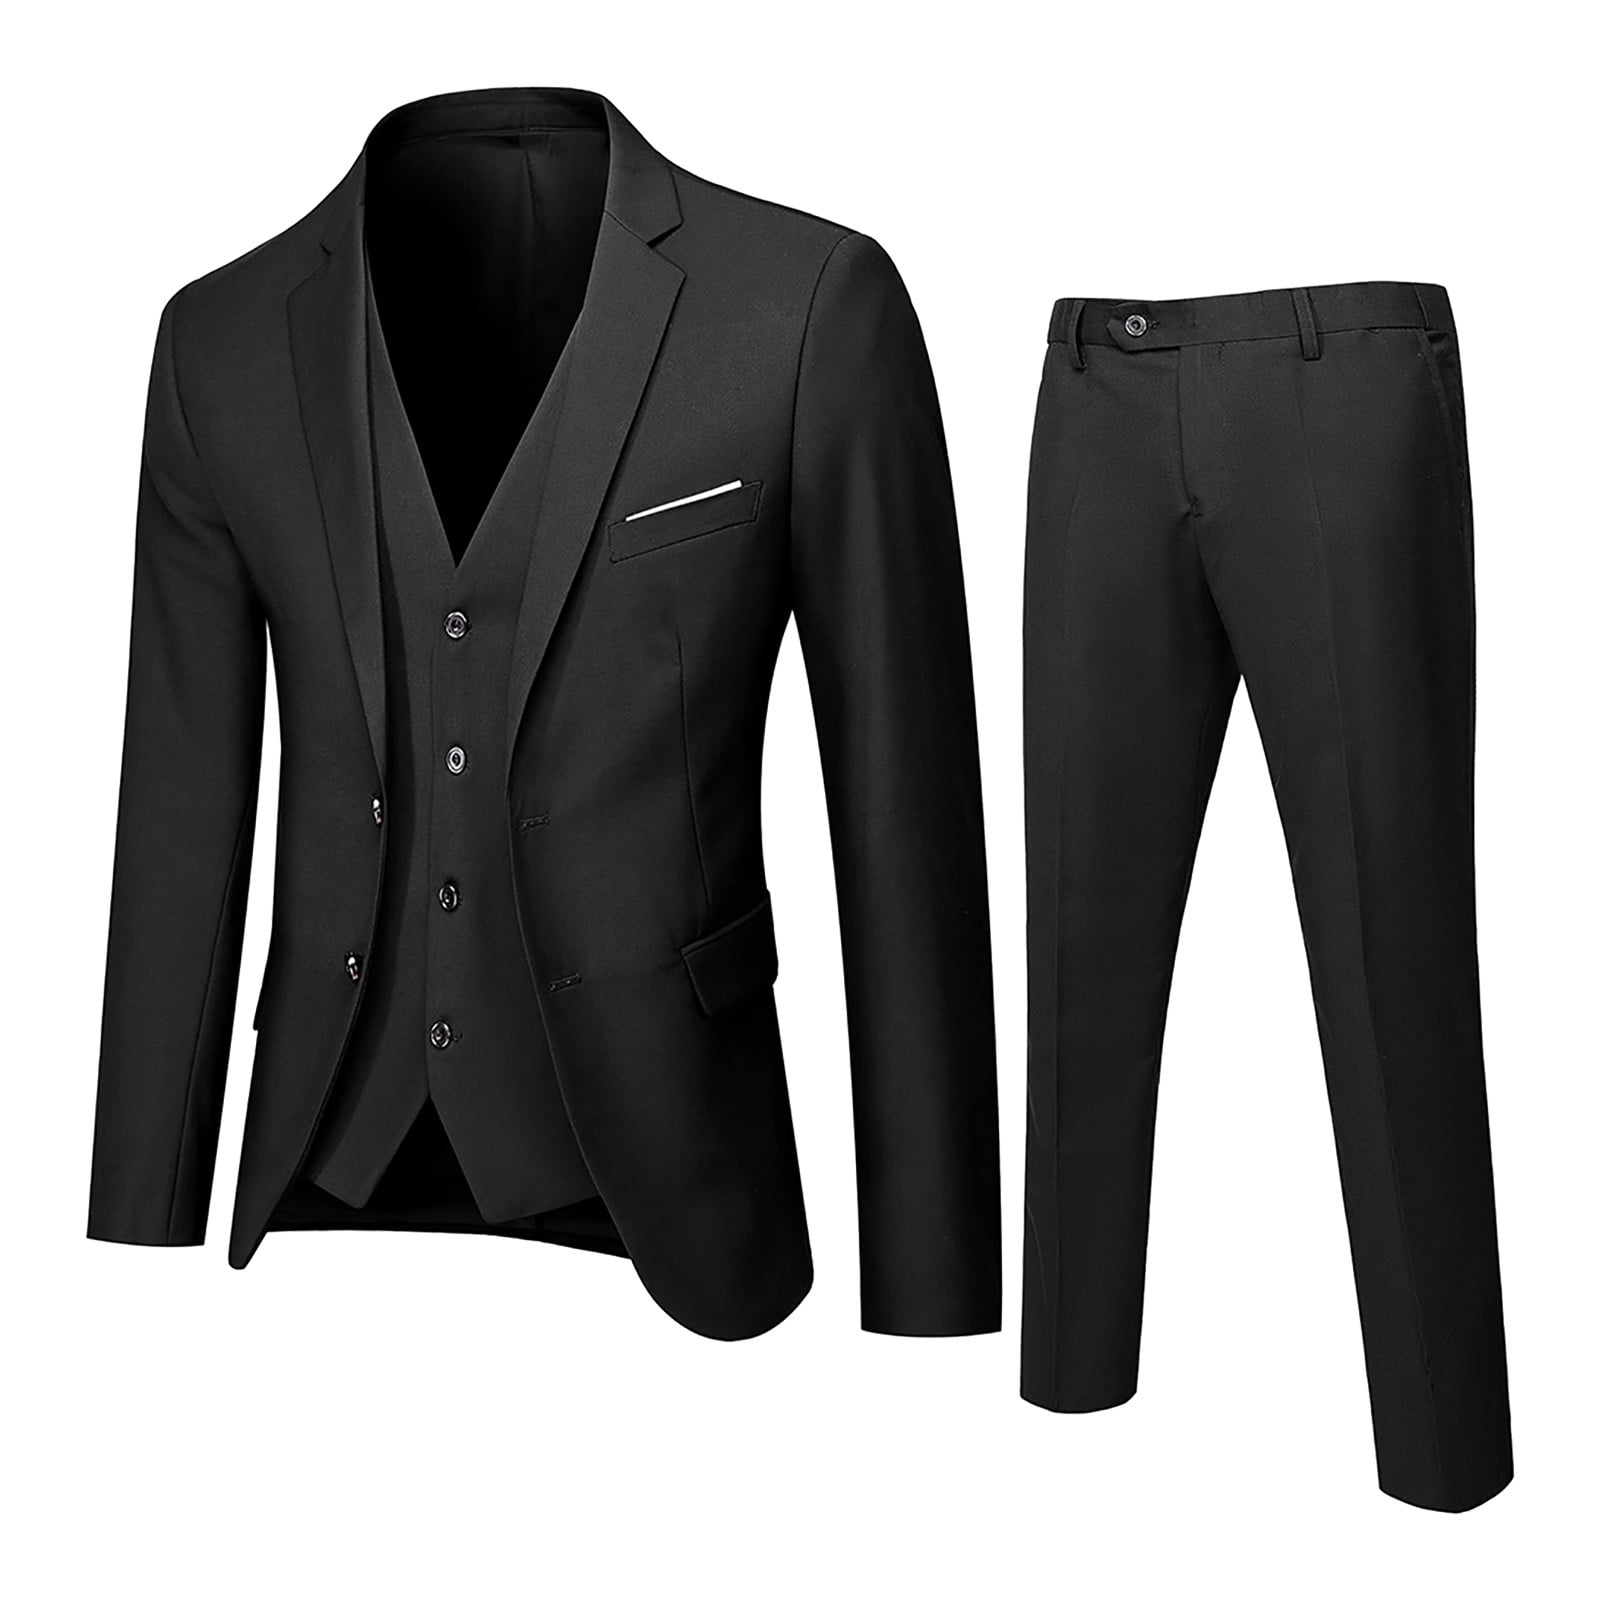 wofedyo blazer for men Men’s Suit Slim 3 Piece Suit Business Wedding ...